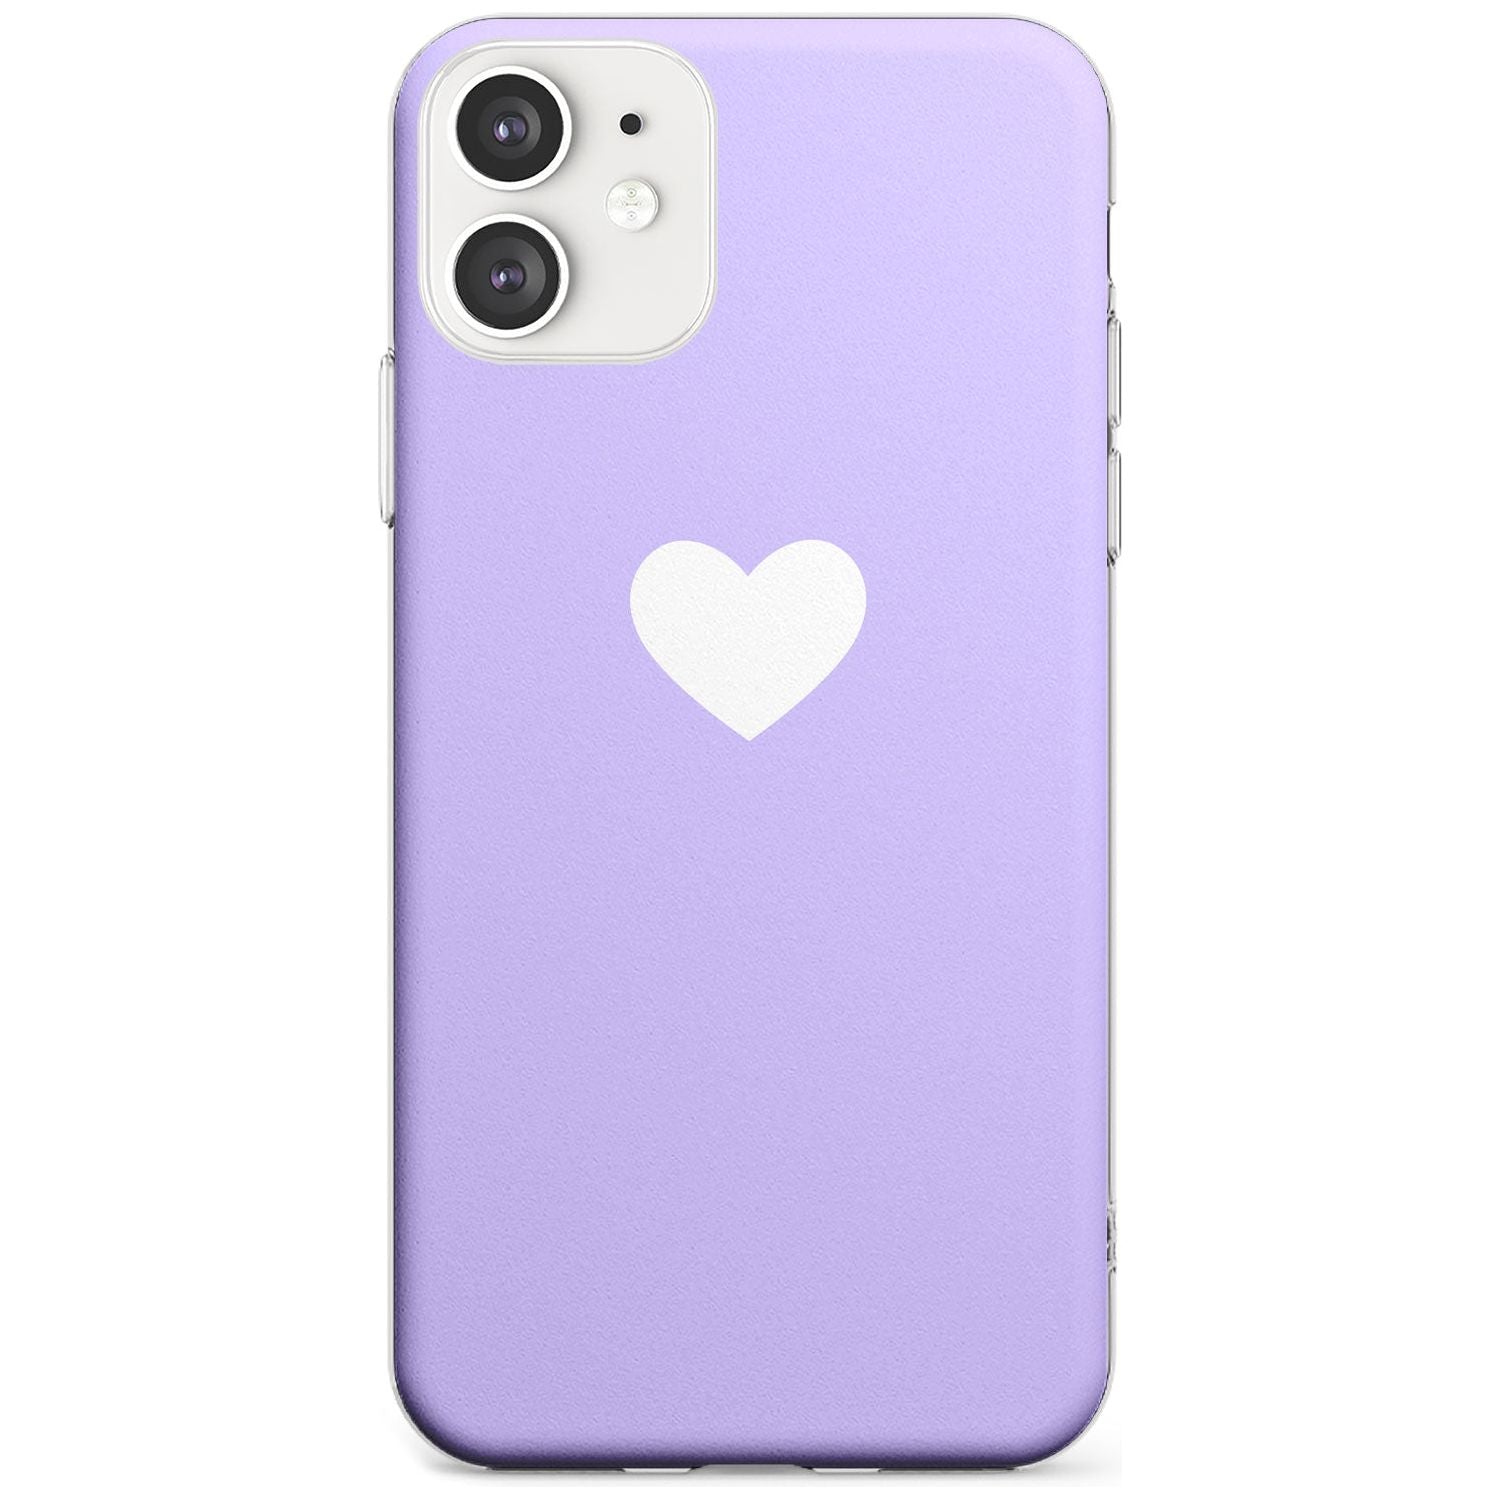 Single Heart White & Pale Purple Slim TPU Phone Case for iPhone 11